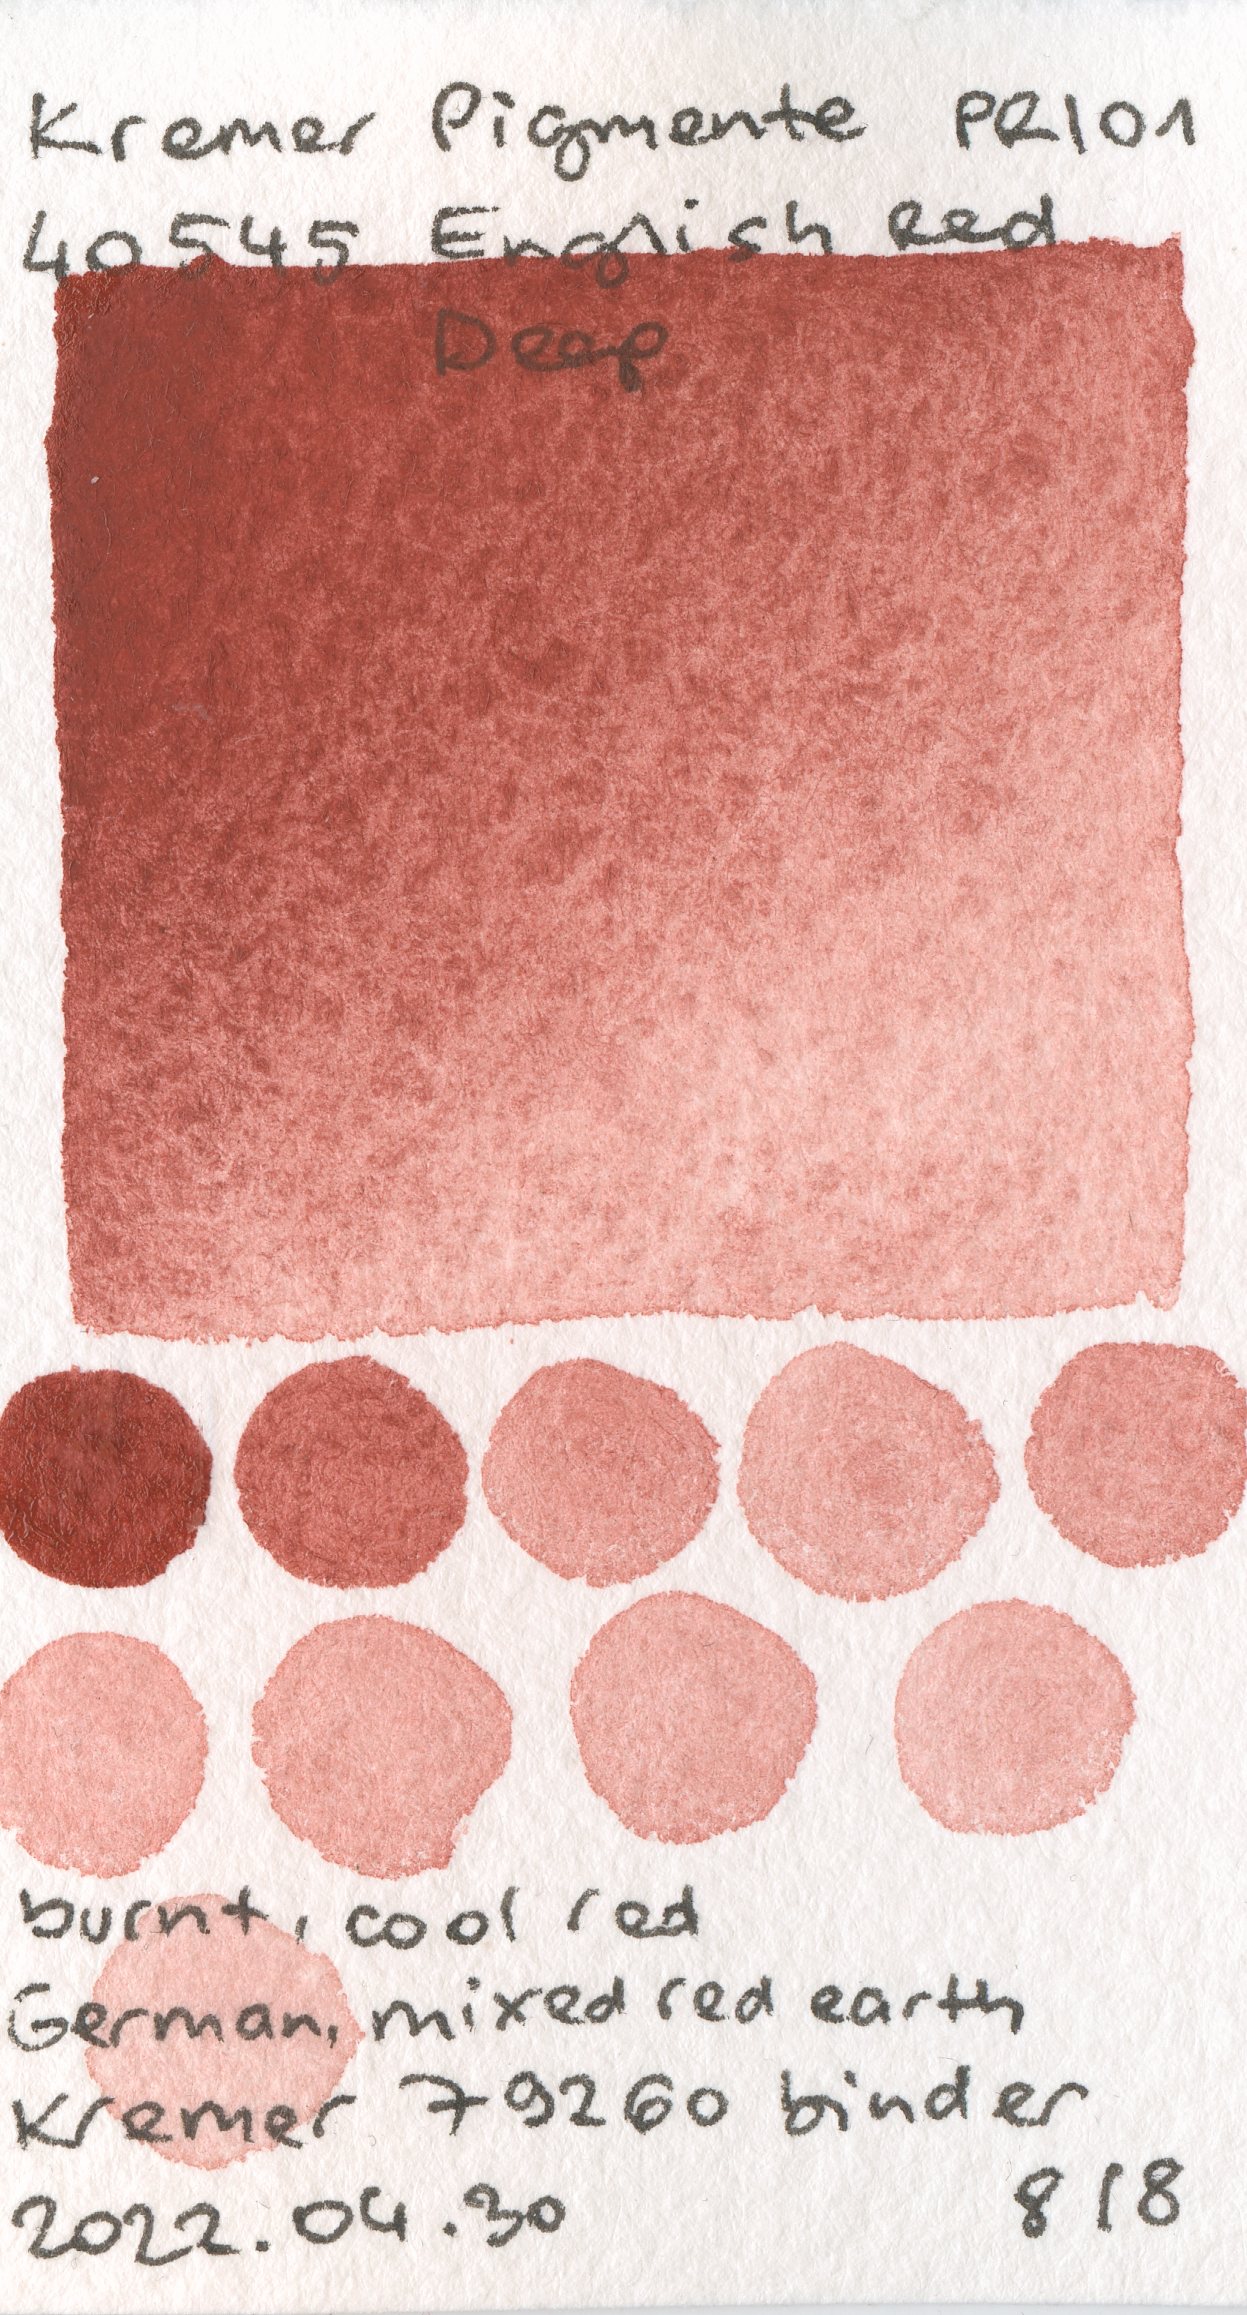 Kremer Pigmente [Dry] Pigments 40545 English Red Deep PR101 watercolor swatch